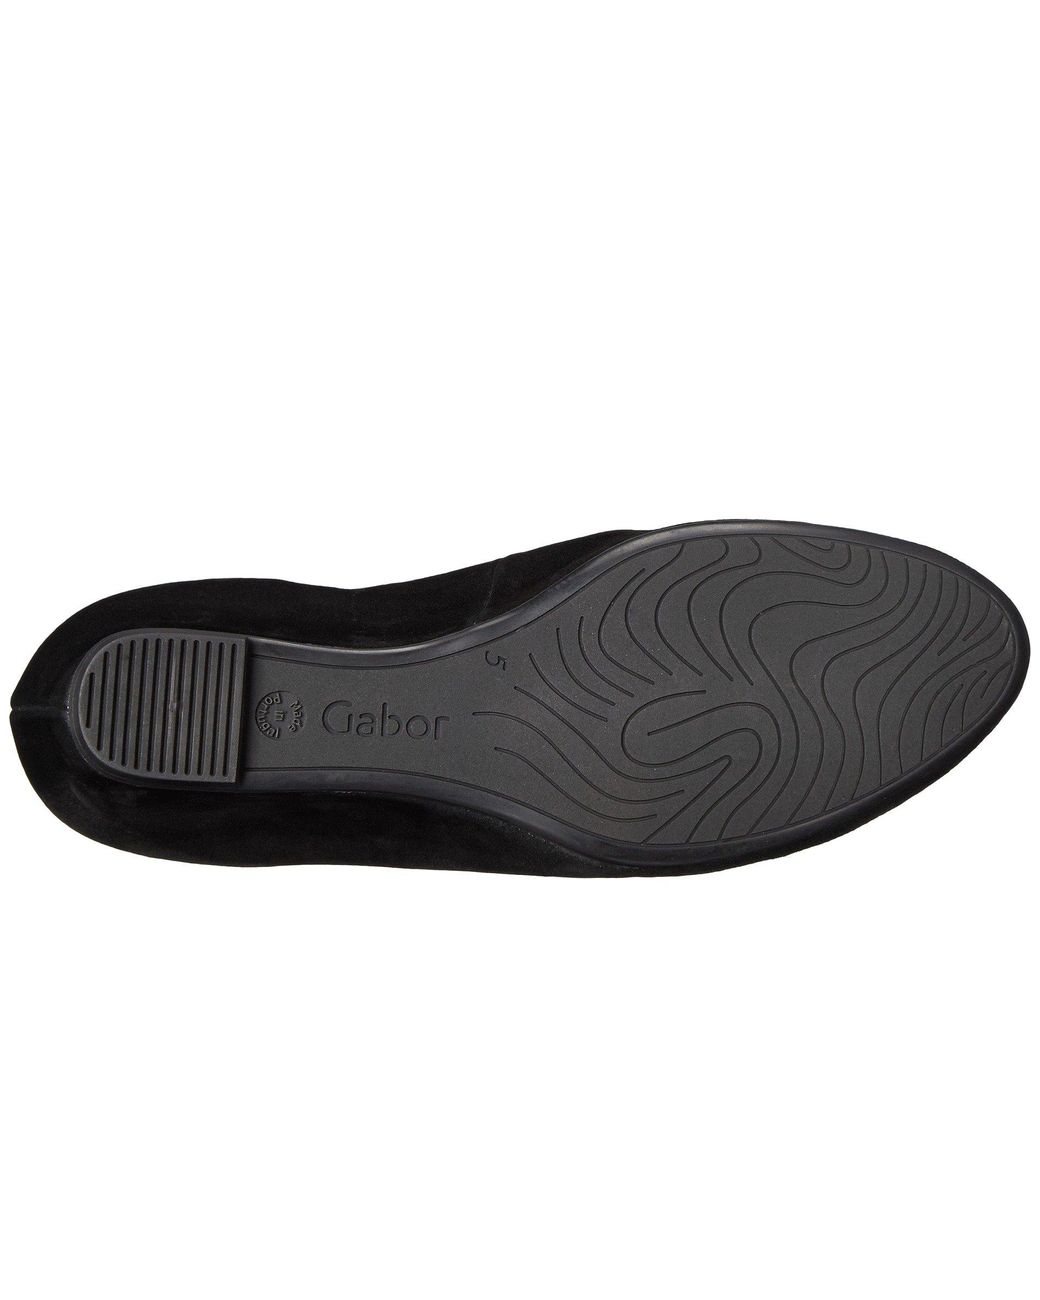 gabor black wedge shoes